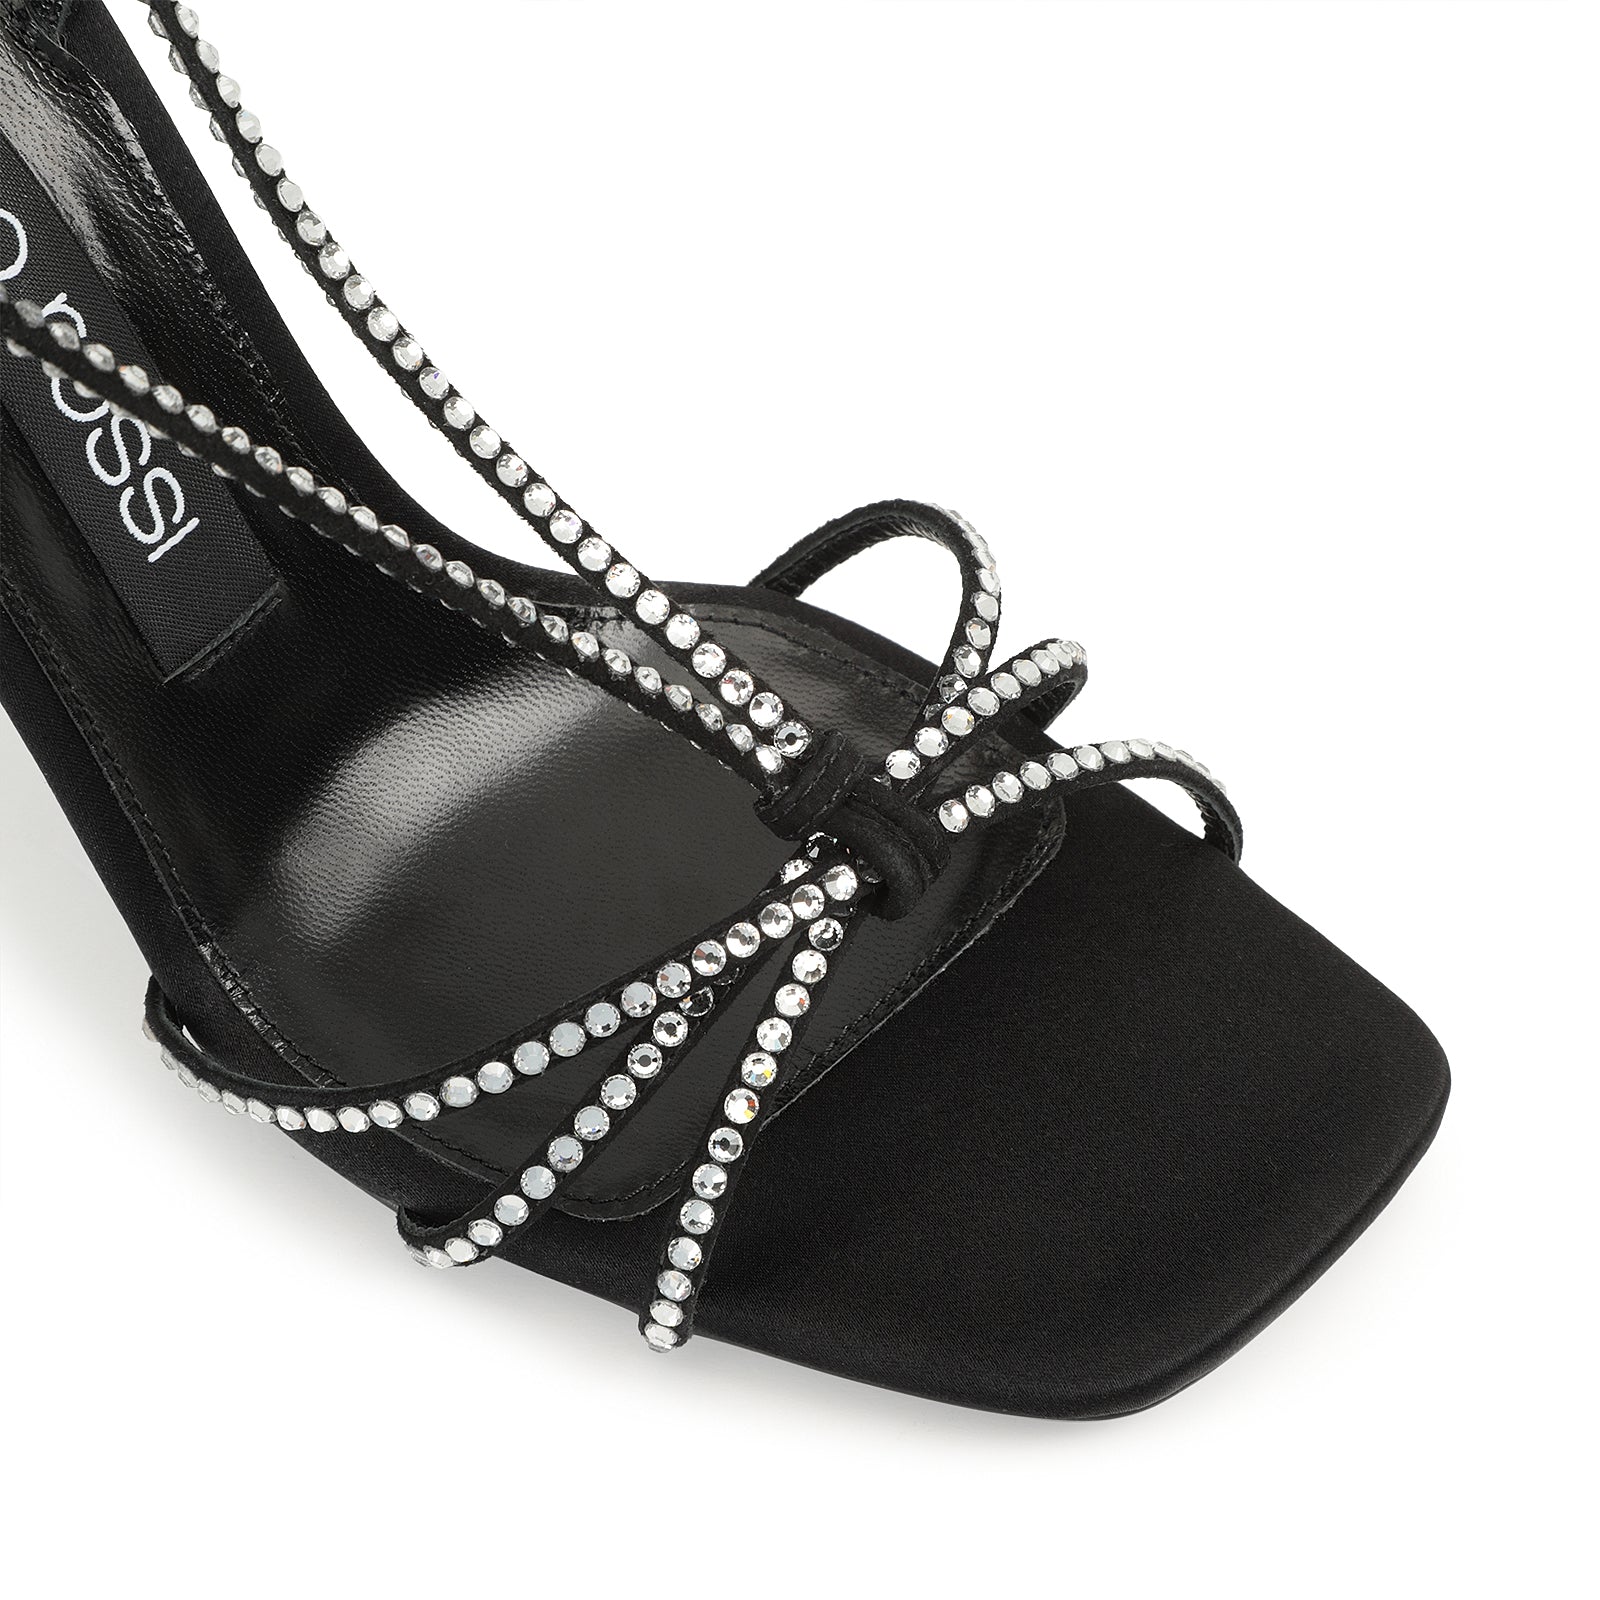 Sr Dea Crystal 95 heeled sandals - Nero & Crystal